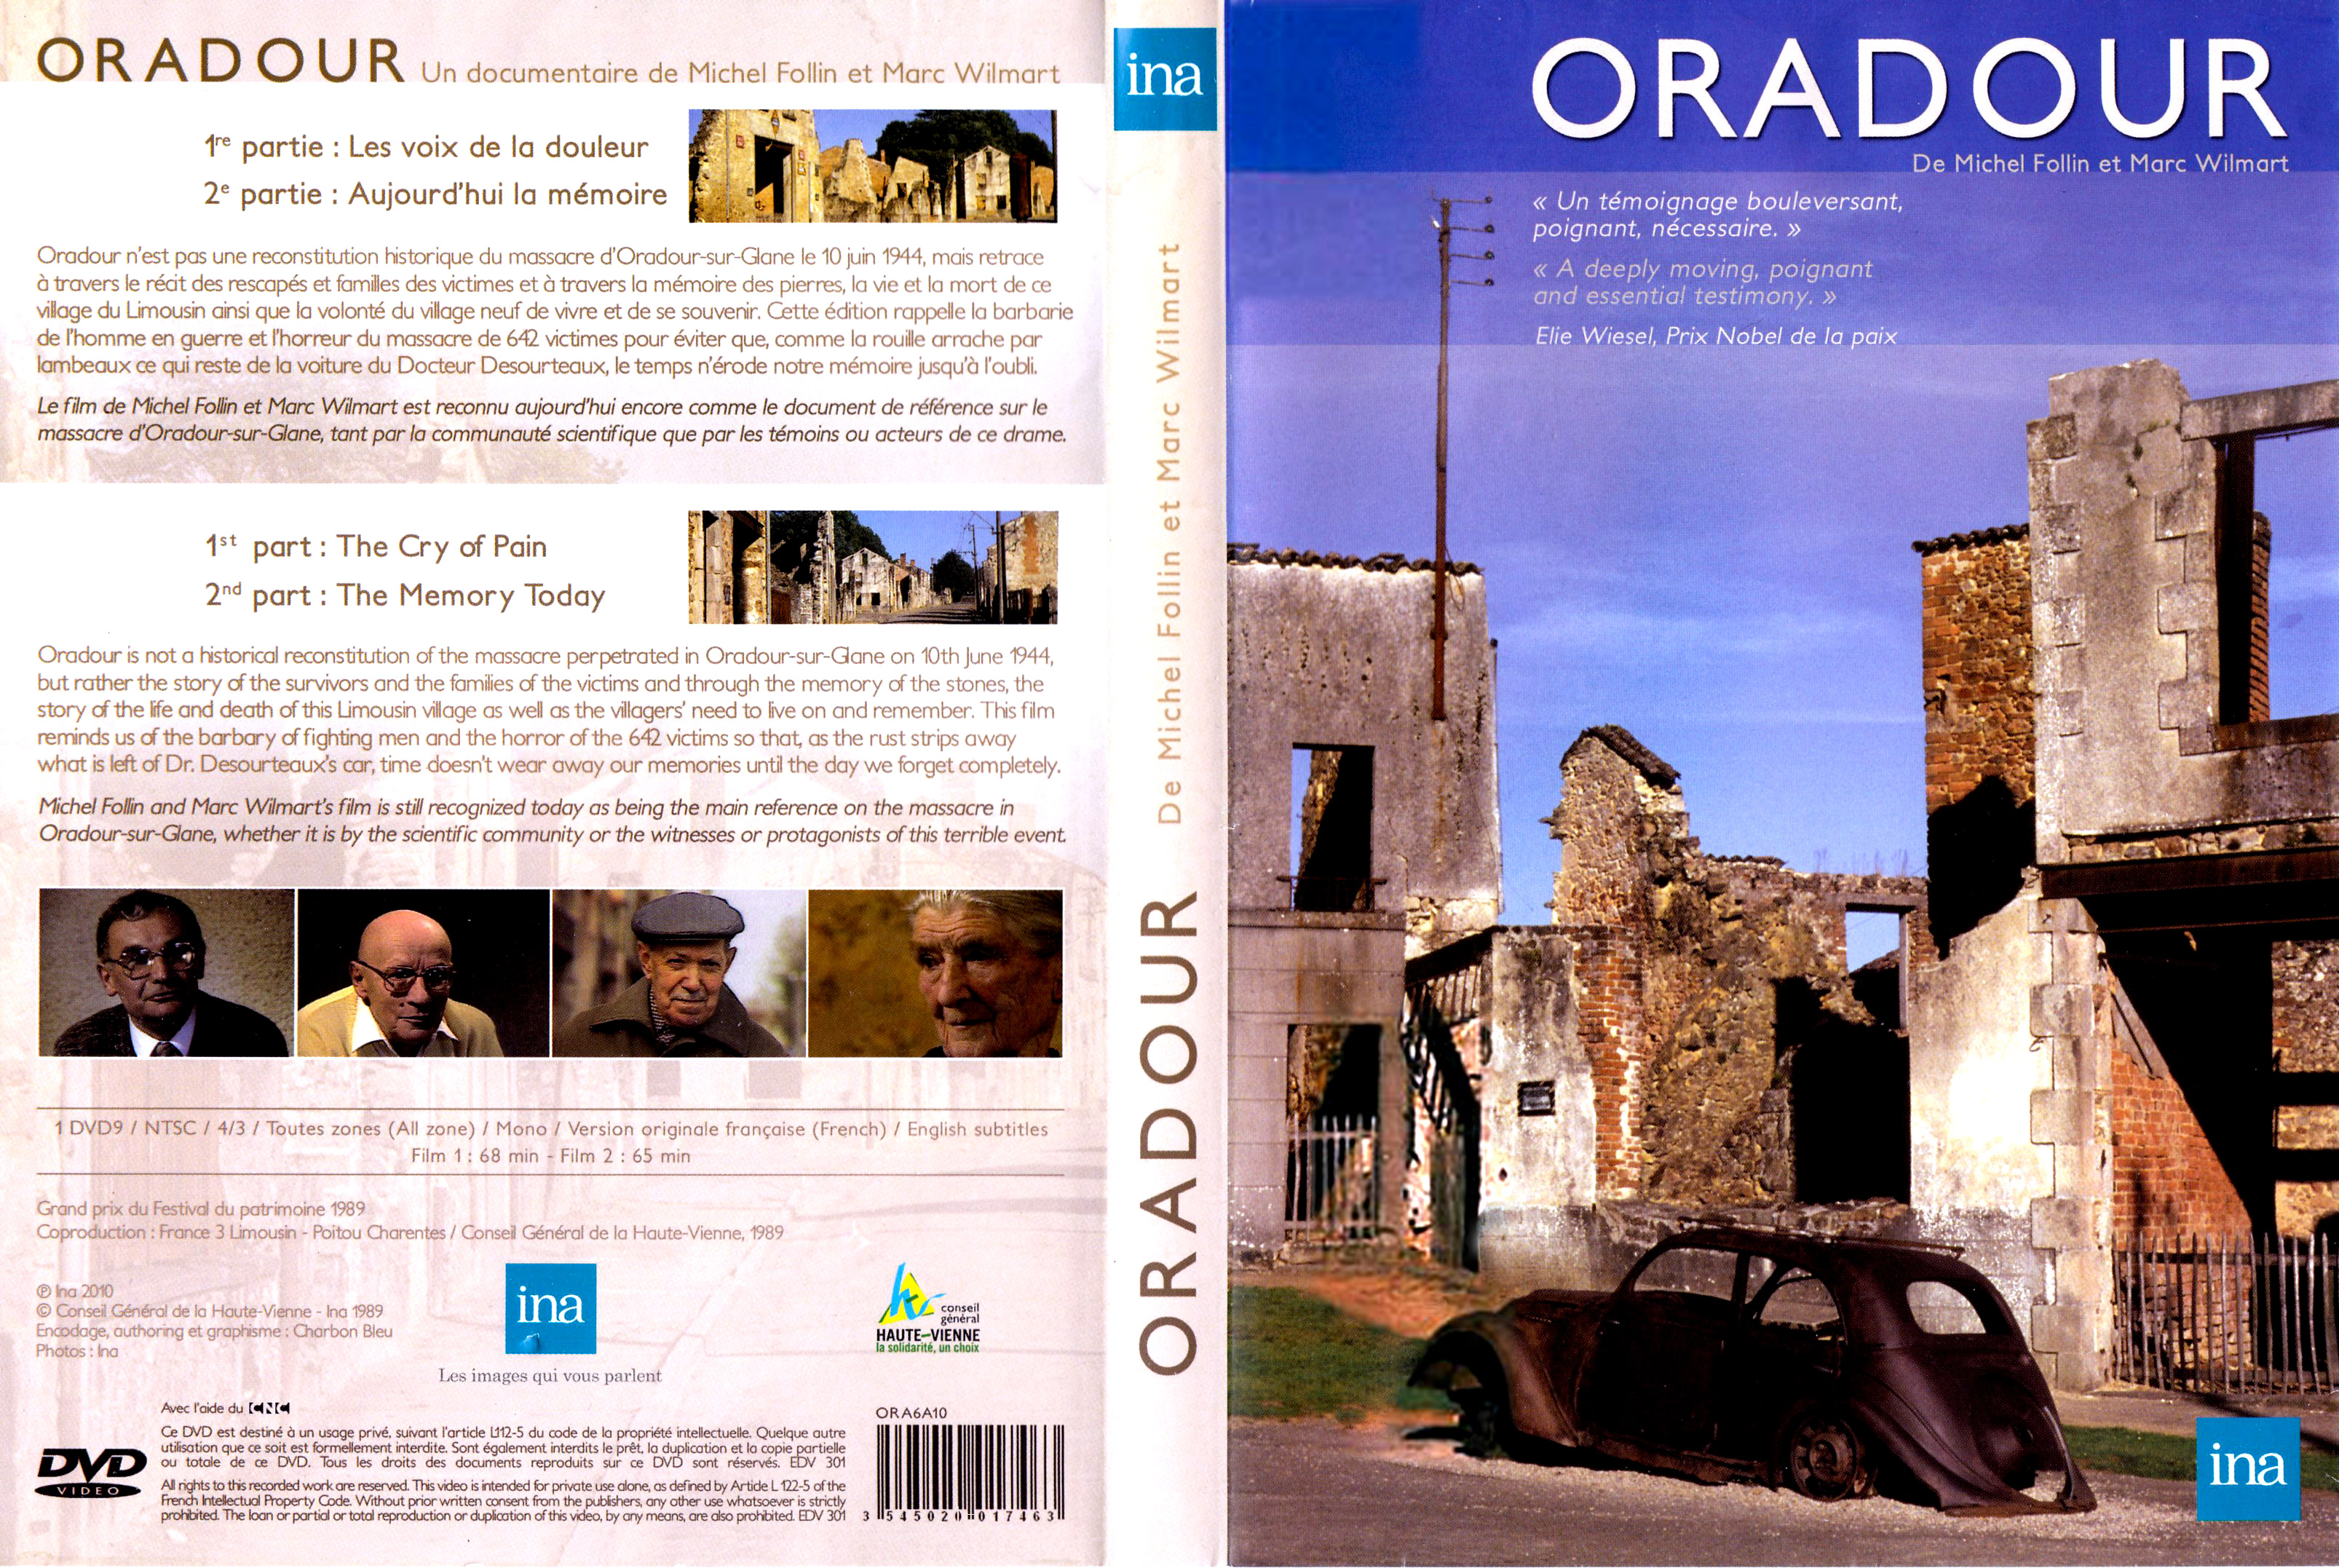 Jaquette DVD Oradour